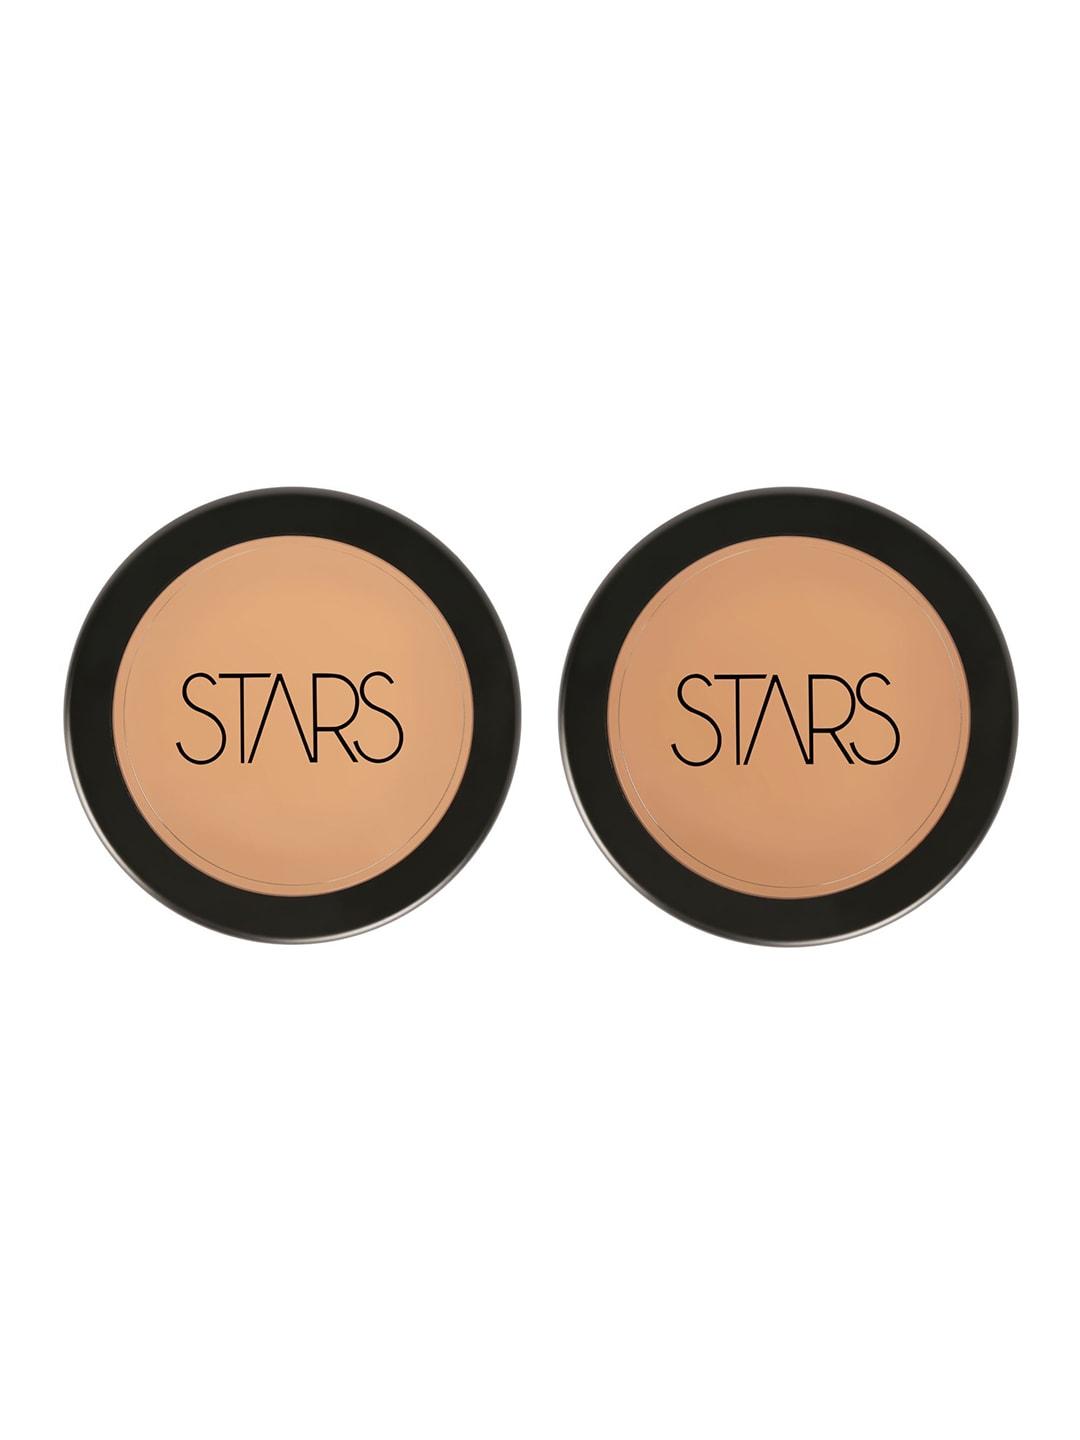 stars cosmetics matte finish waterproof cream set of 2 foundation  - 8gm each - s4 - sfs